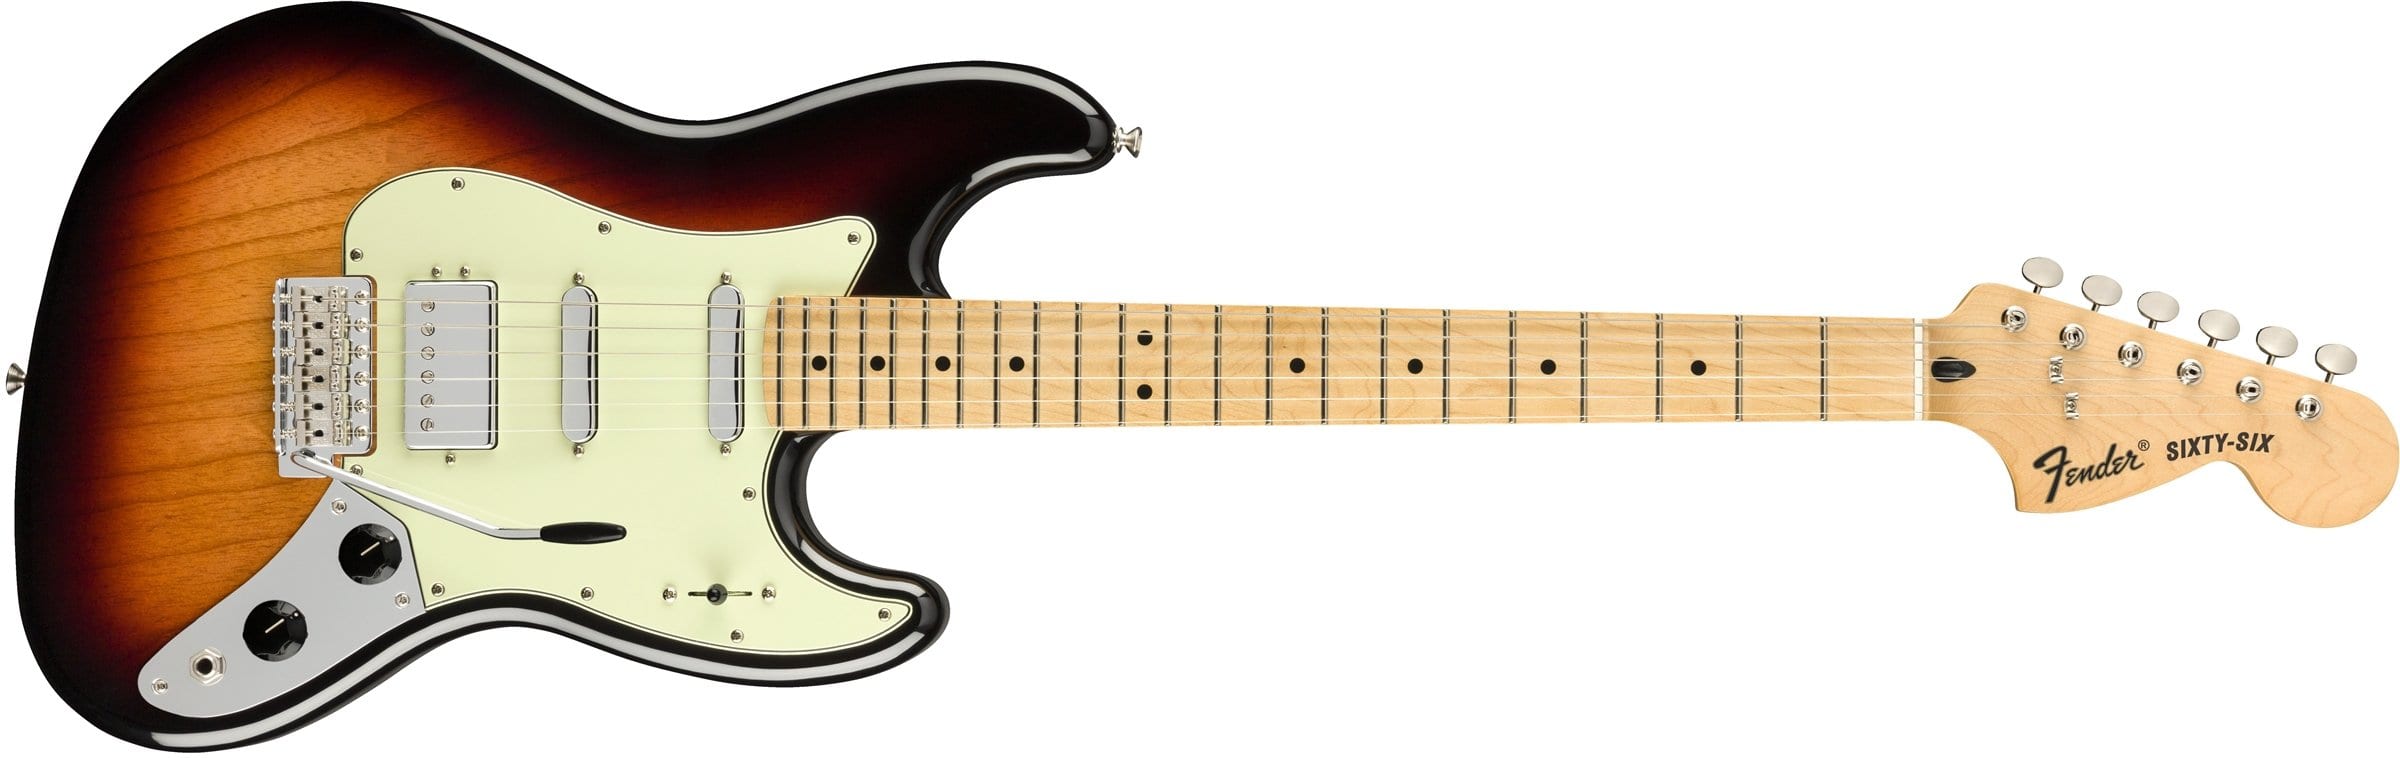 Fender Alternate Reality Sixty Six in 3-Colour Sunburst